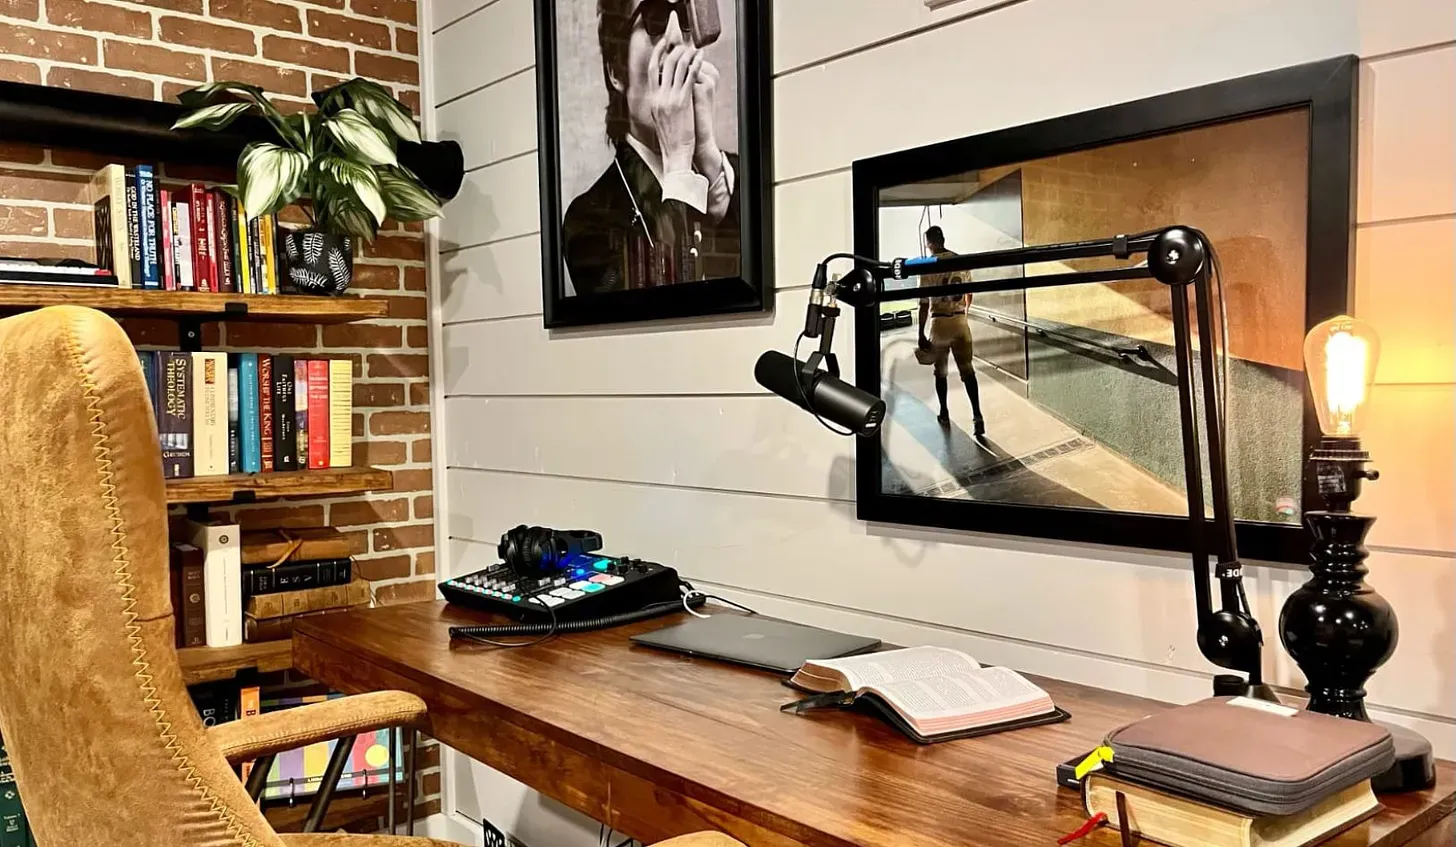 Jeremy Sarber’s office and studio